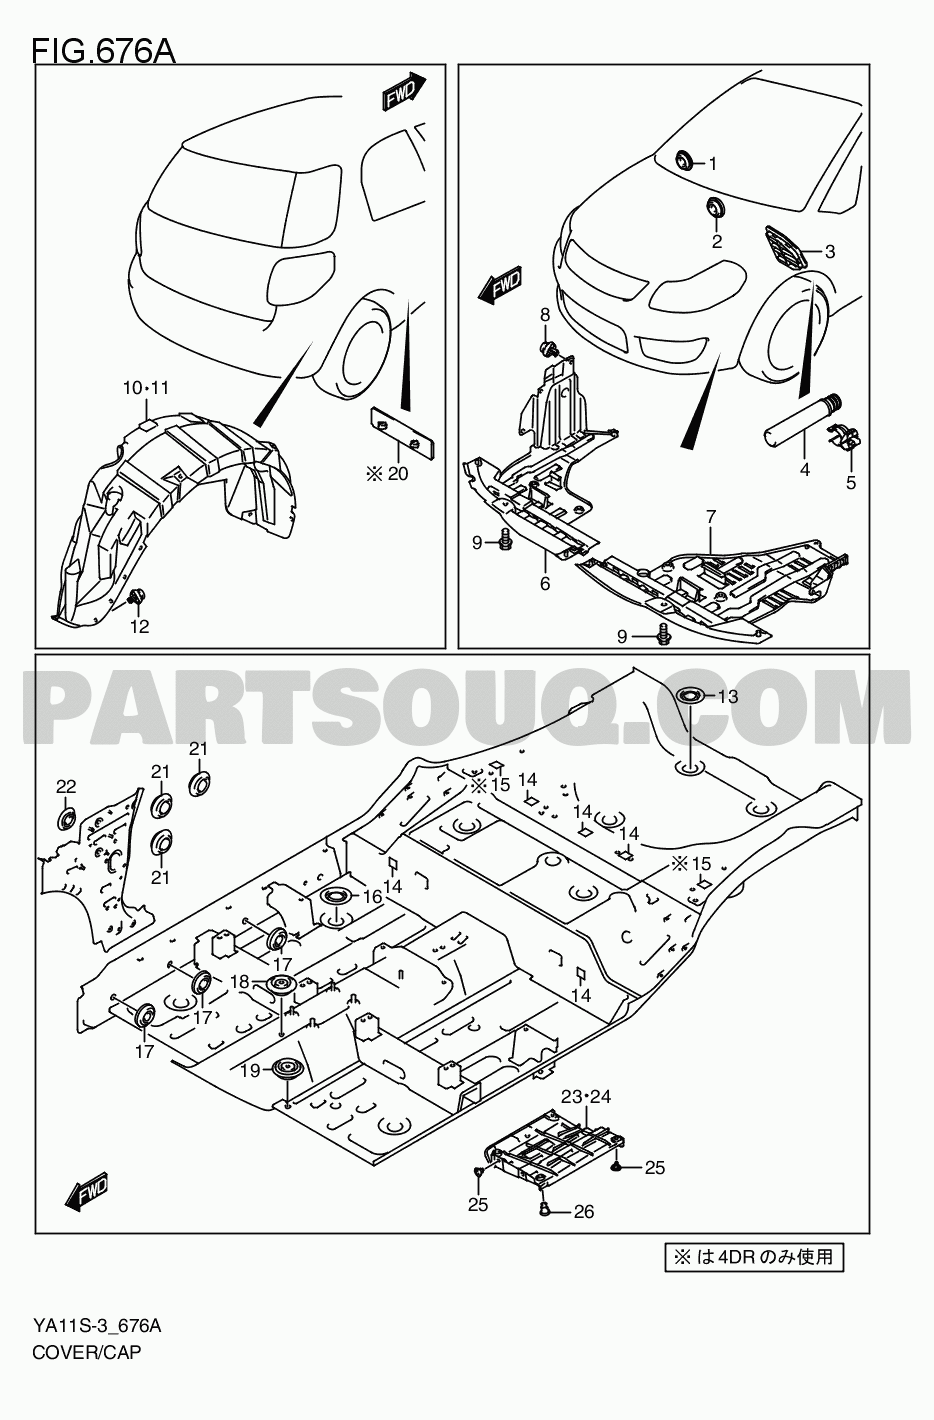 Body | Suzuki SX4 駆動;ドア数;略称 YA11S-3 | Parts Catalogs | PartSouq